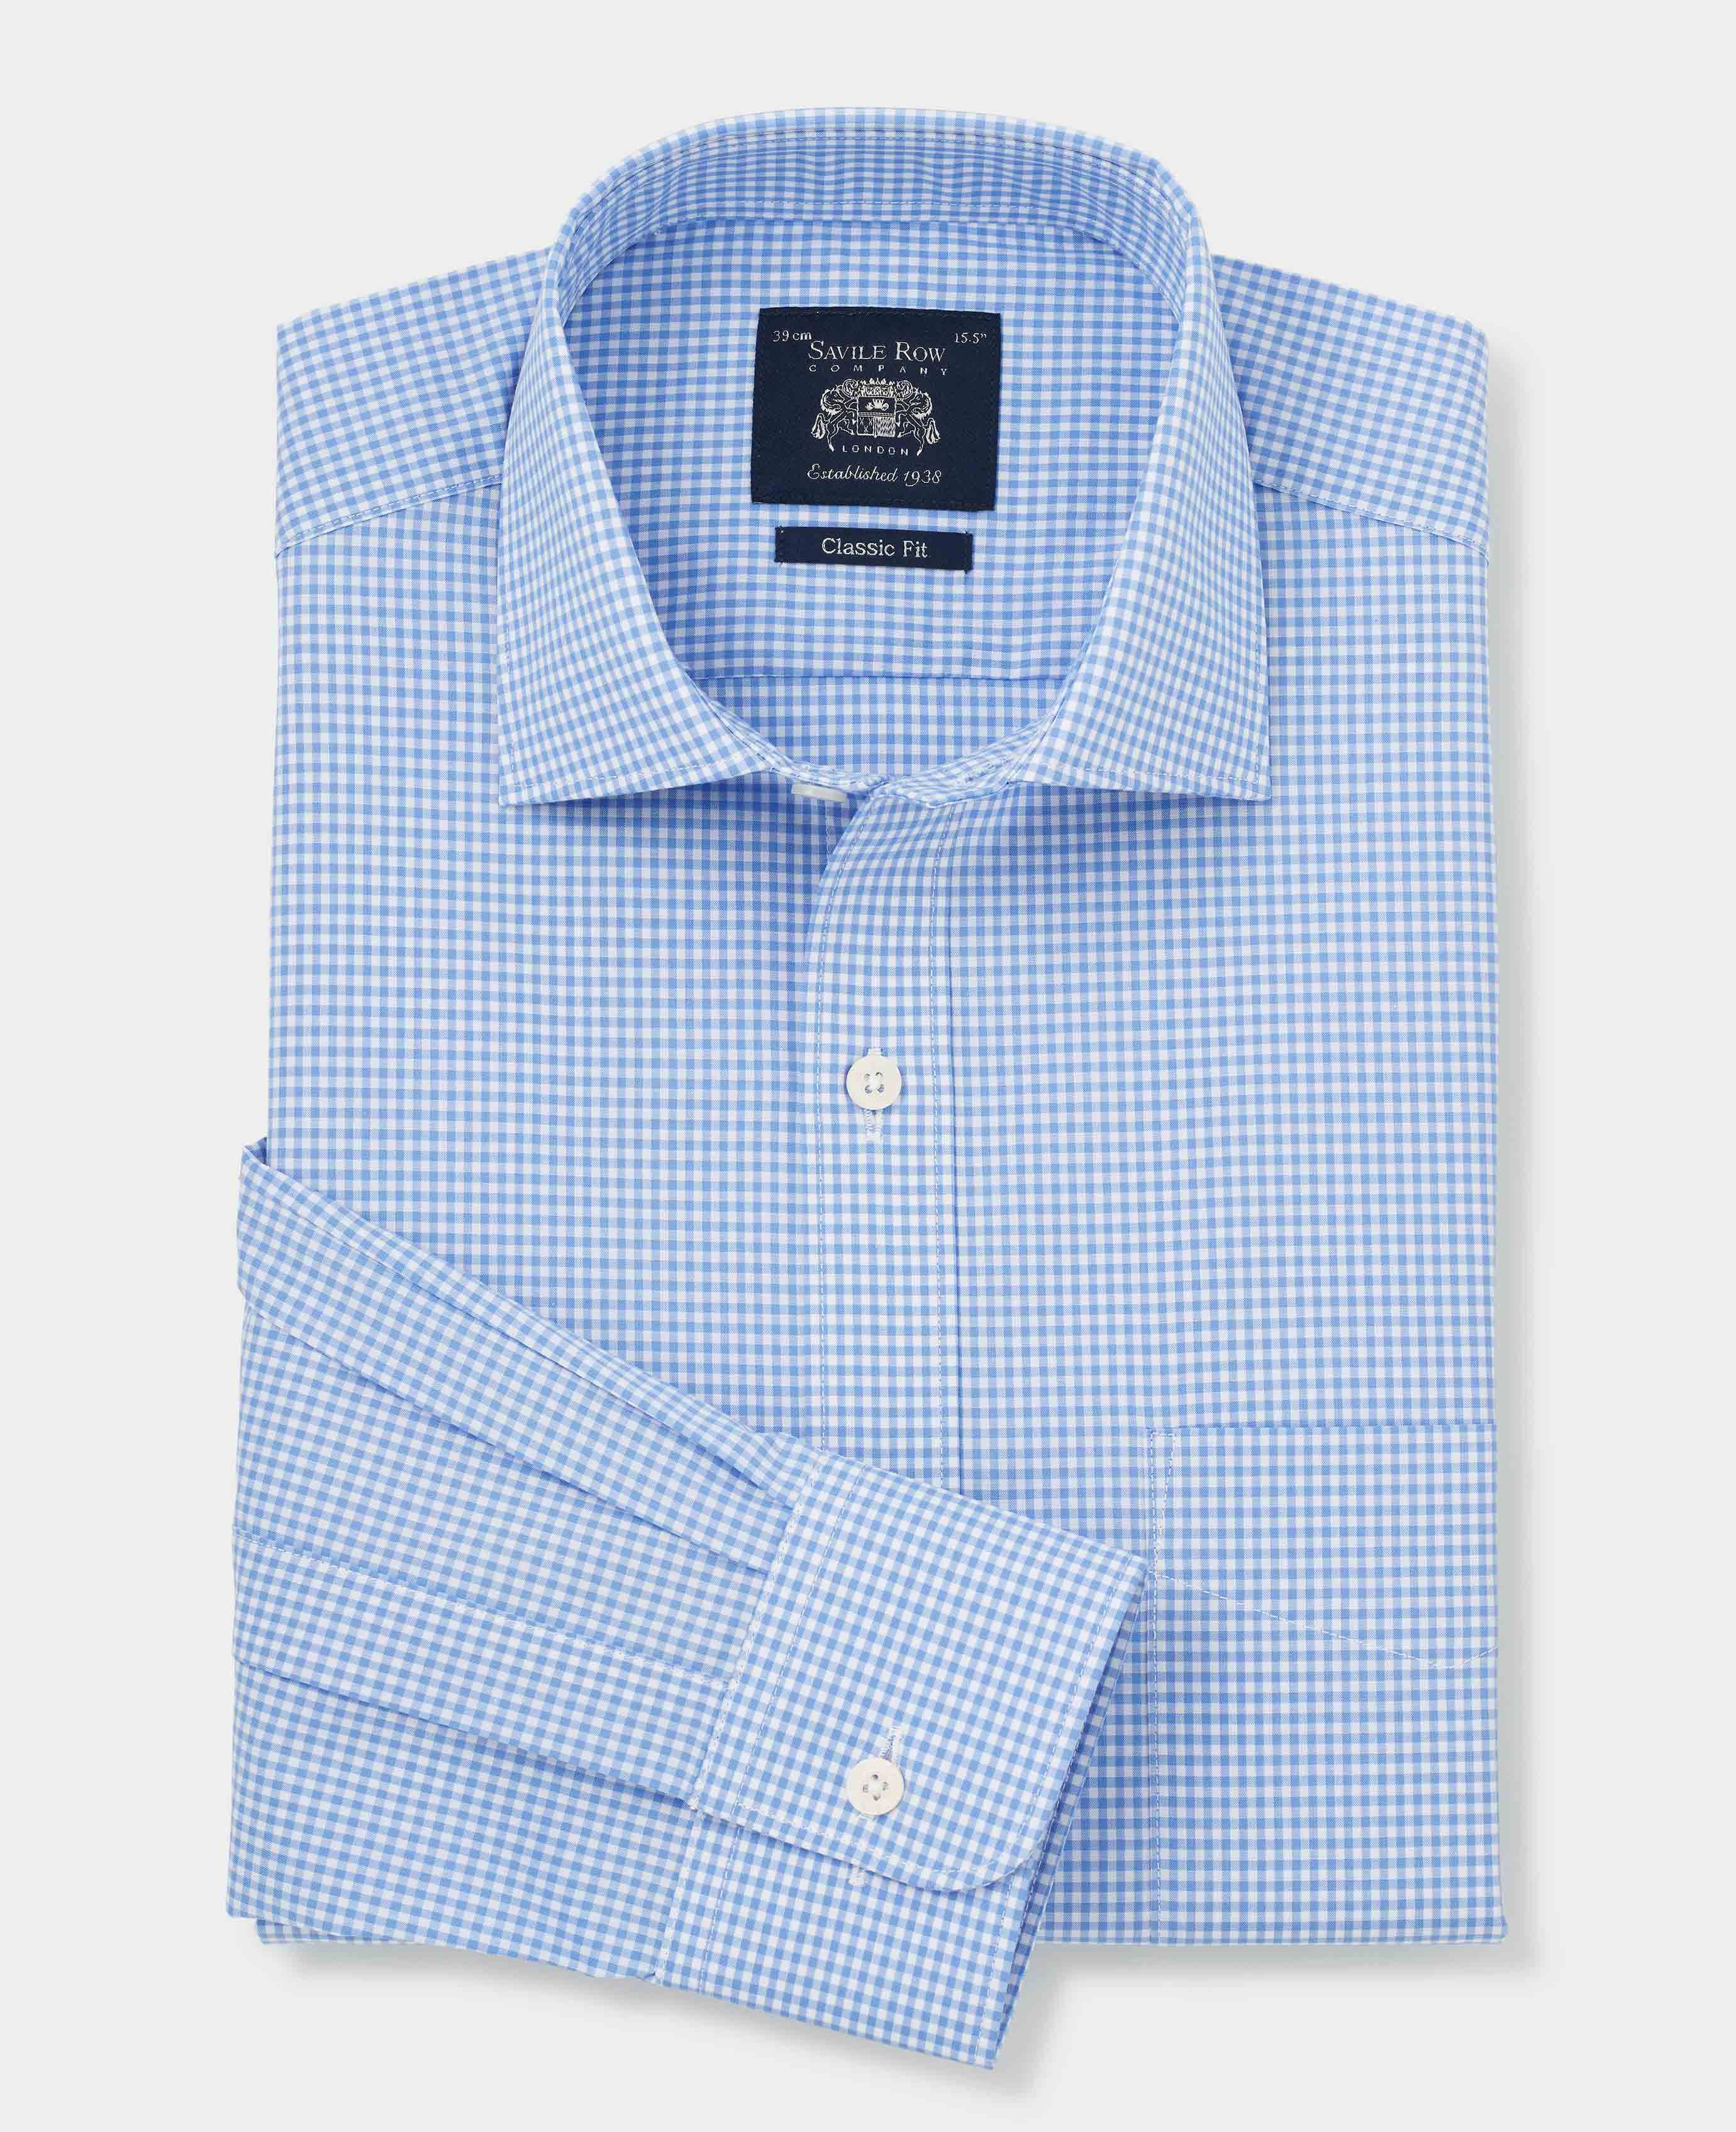 Men’s Classic Gingham Single Cuff Shirt in Blue | Savile Row Co